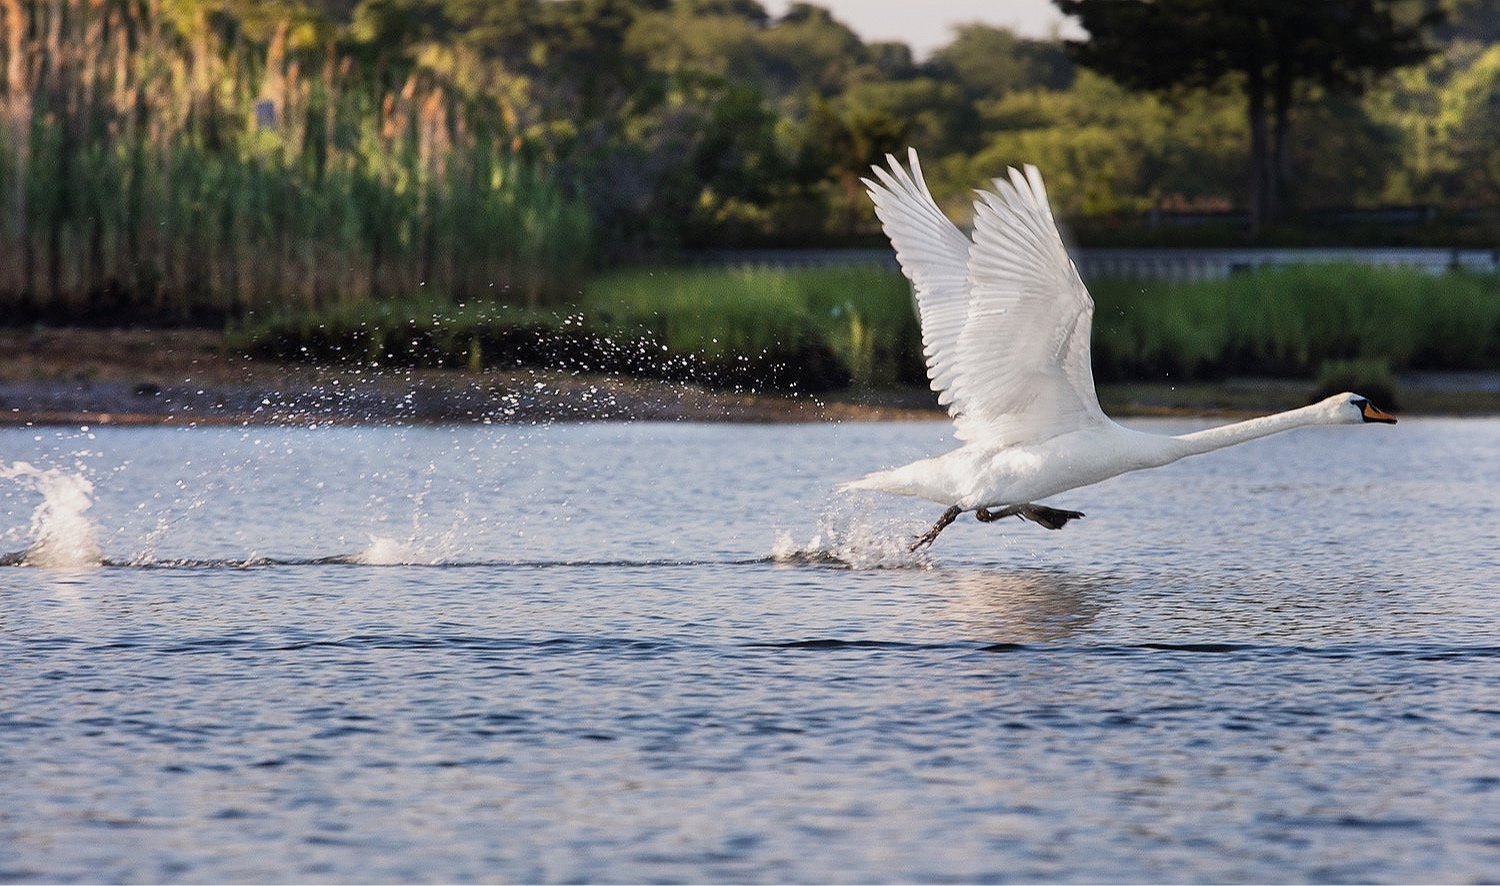  Swan running on water 